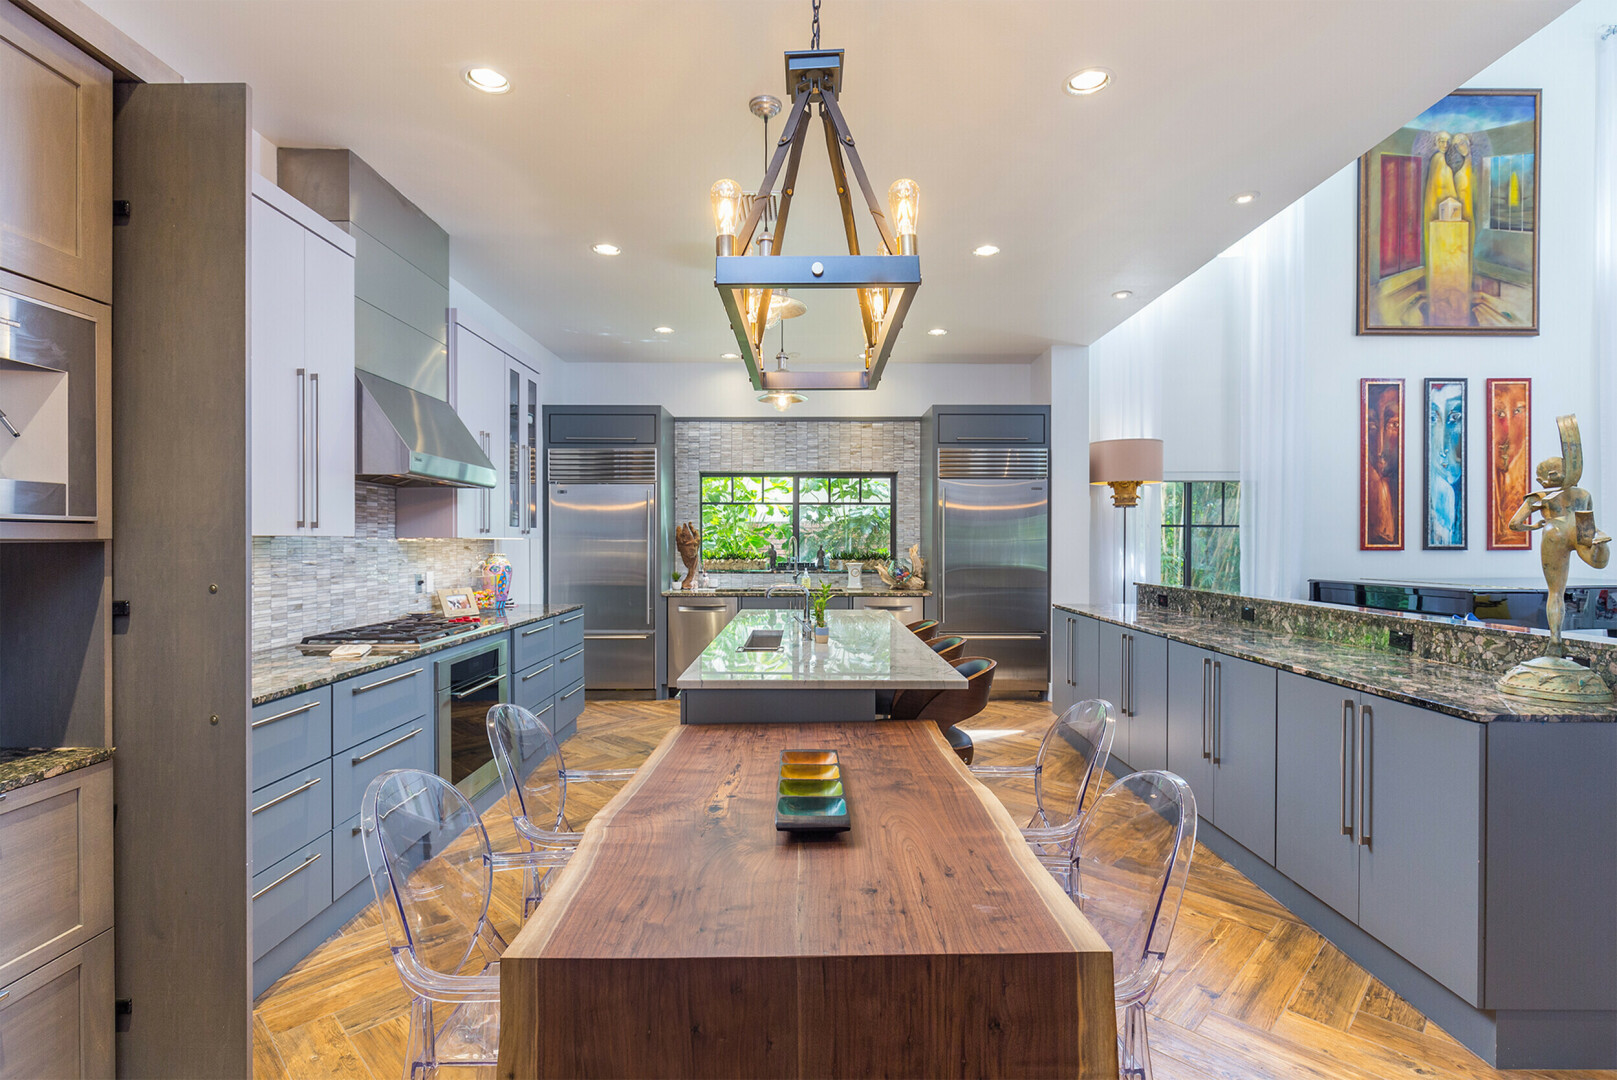 Luxury kitchen boasting custom wood flooring and tile throughout, St. Petersburg FL